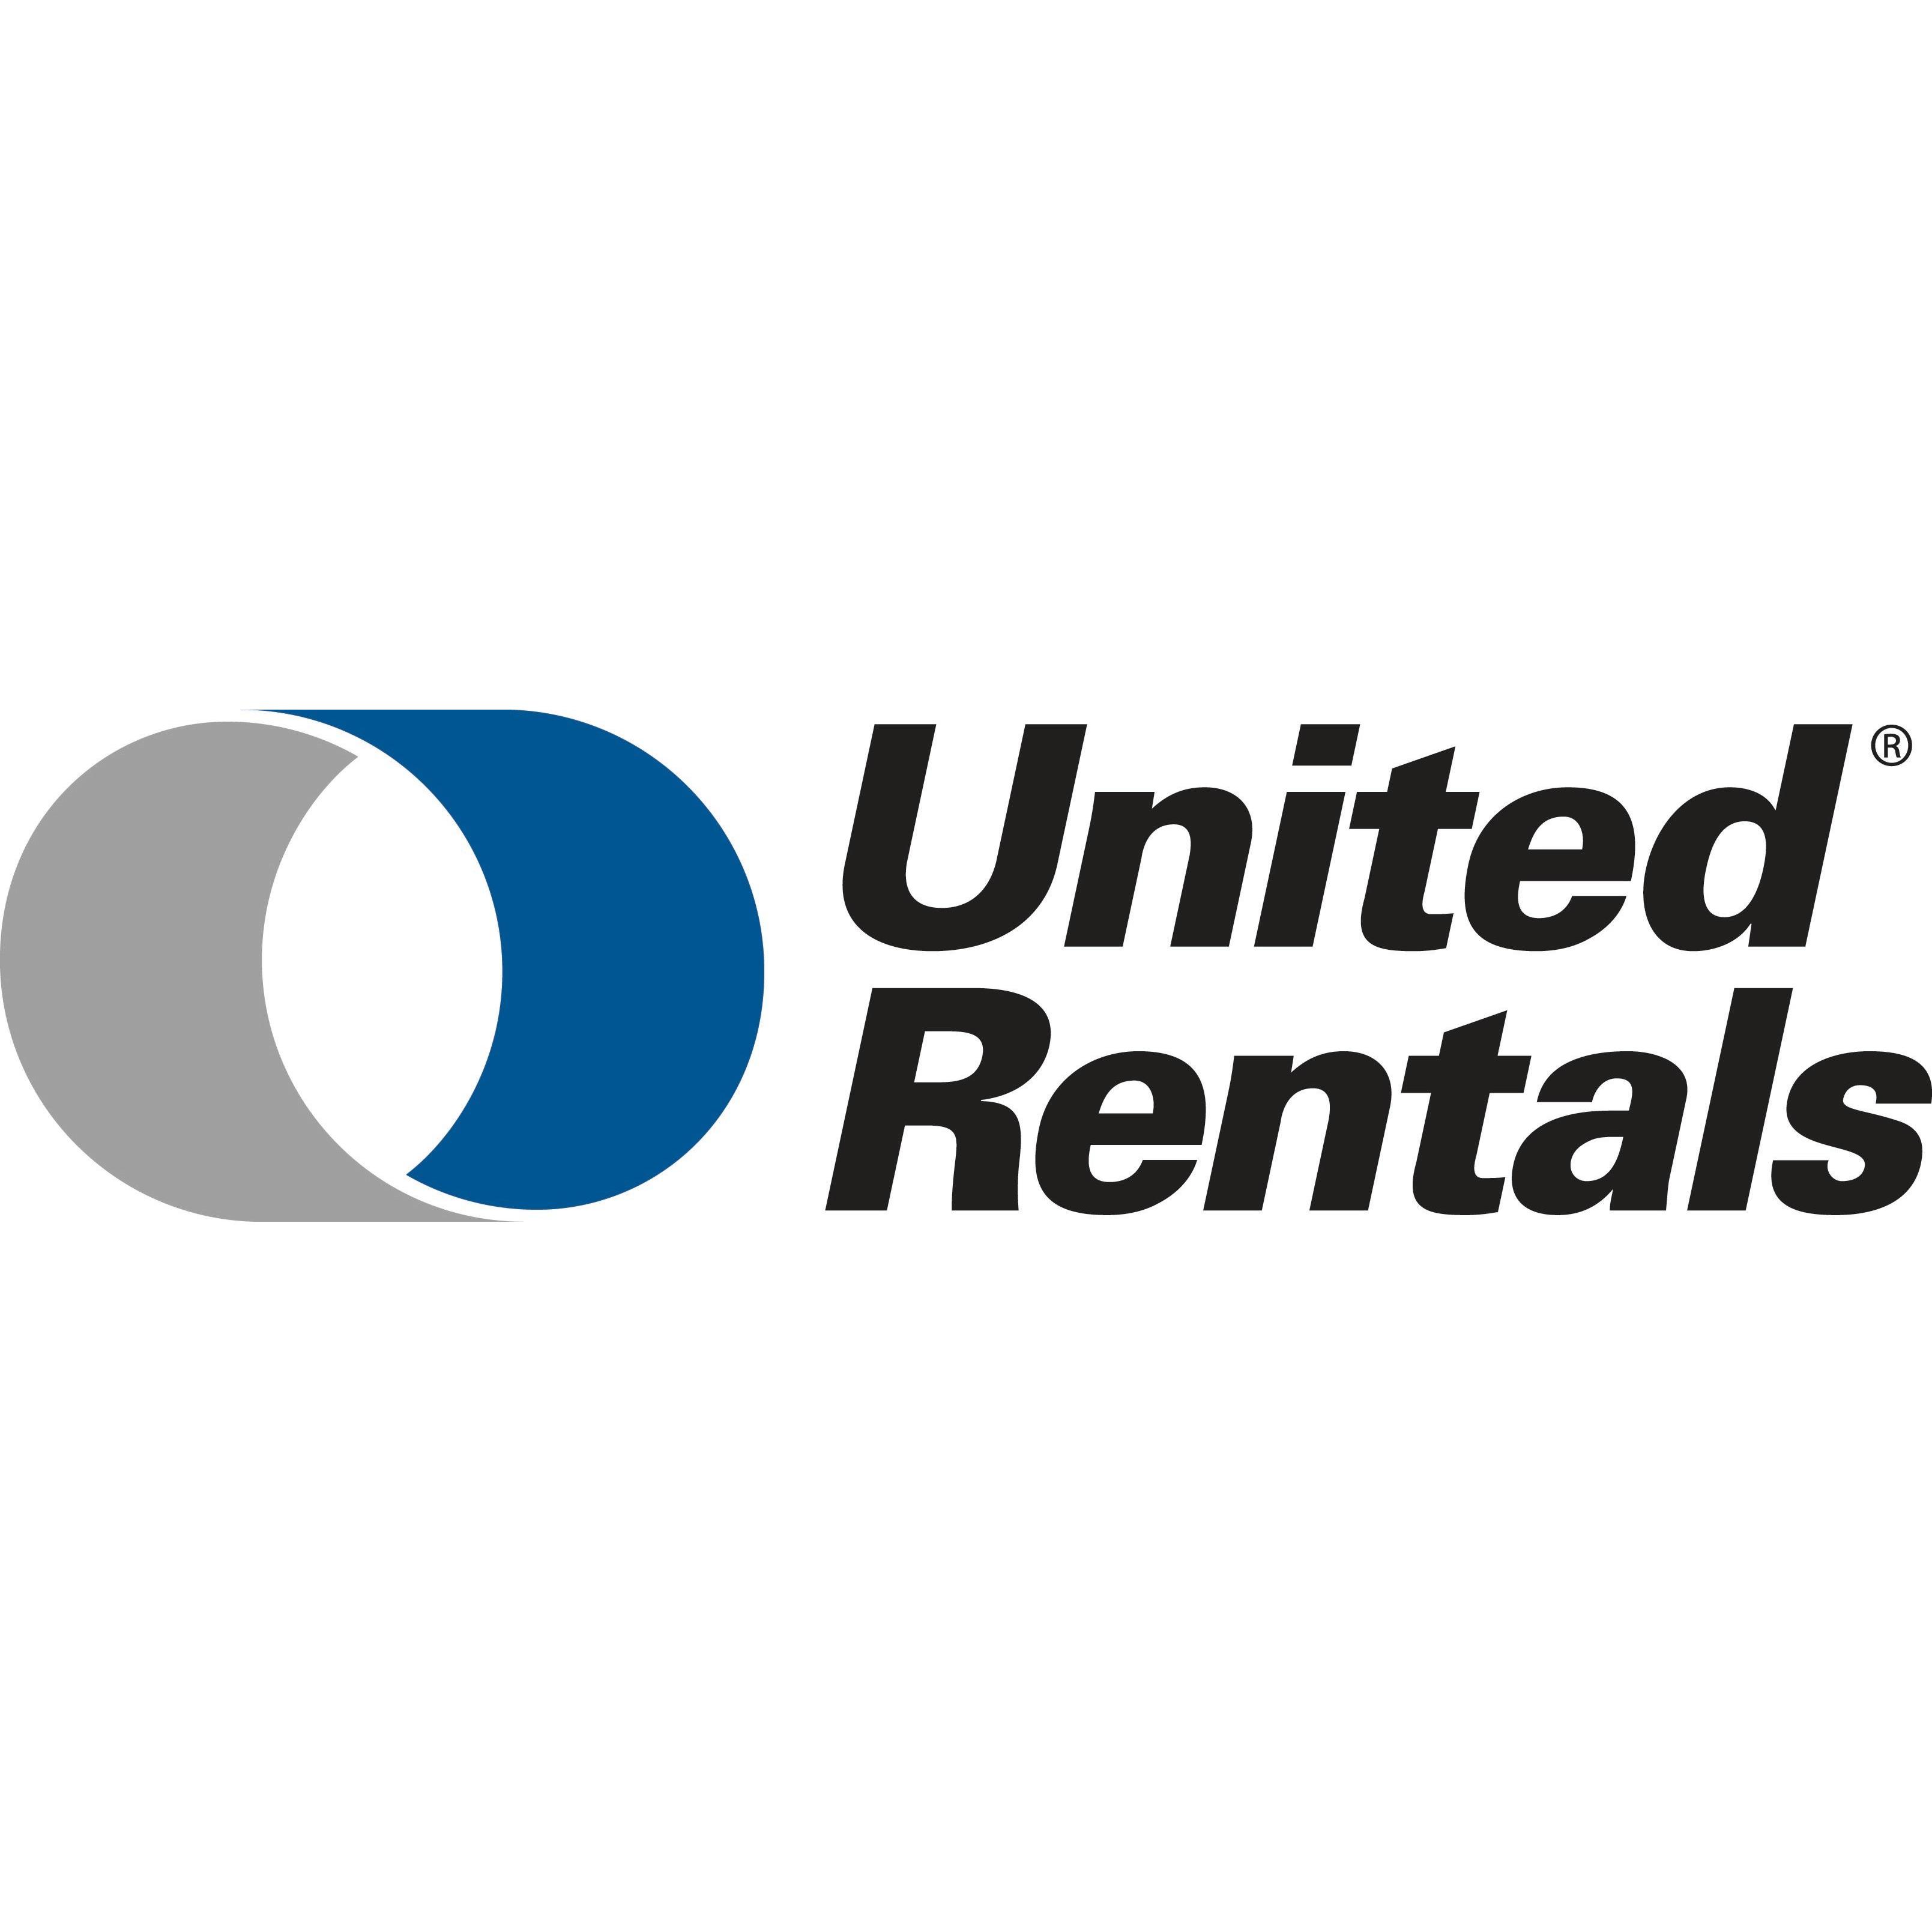 United Rentals - Fluid Solutions: Pumps, Tanks, Filtration